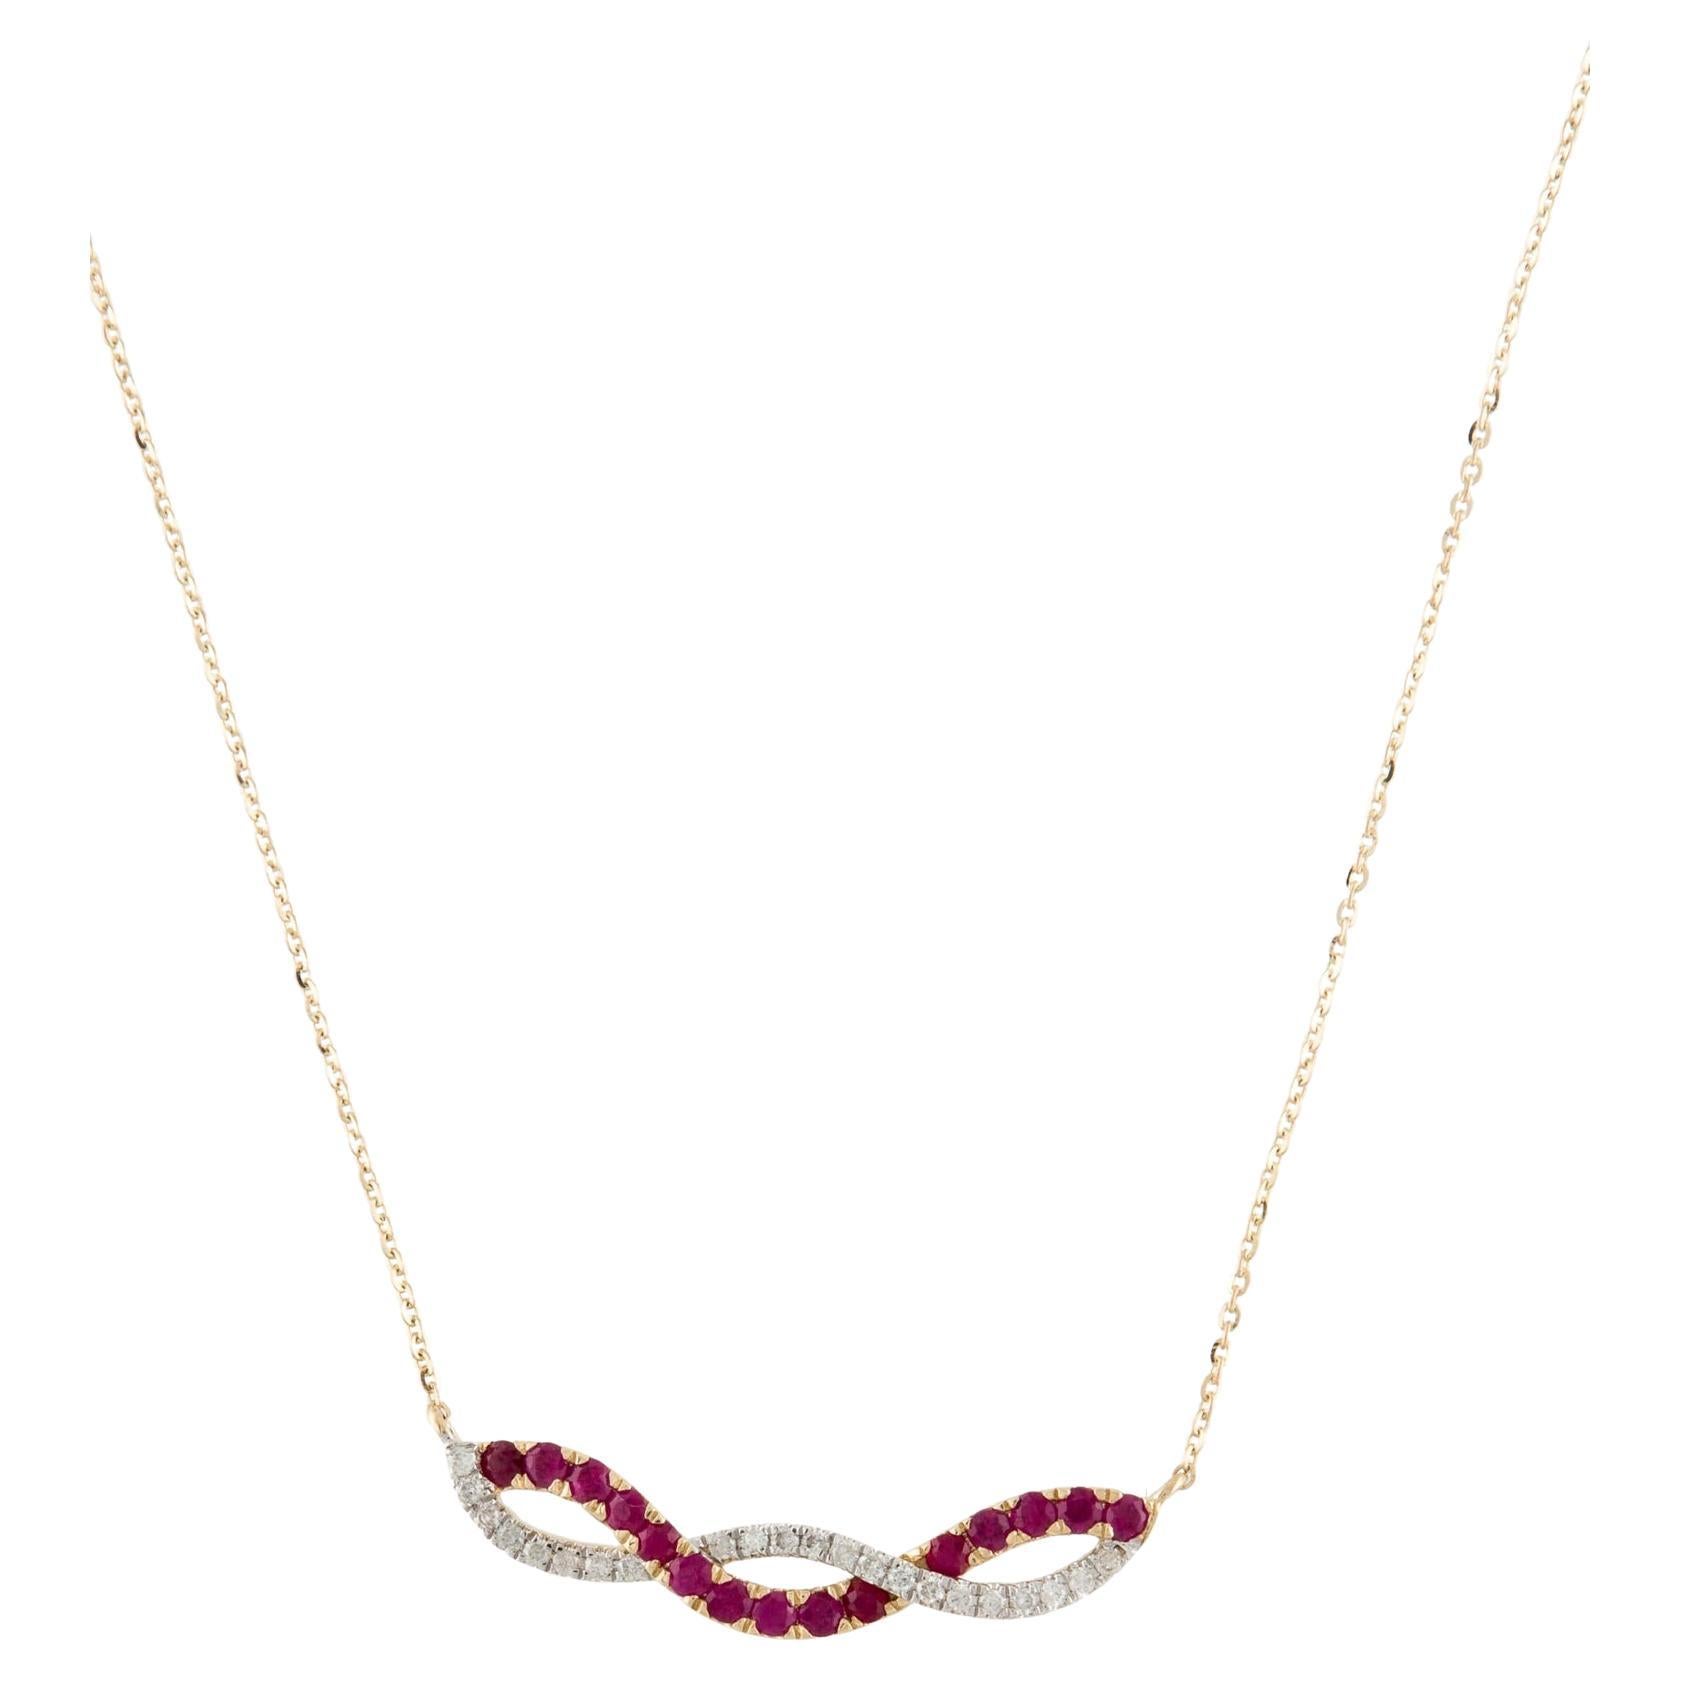 Luxury 14K Ruby & Diamond Pendant Necklace - Elegant Gemstone, Statement Jewelry